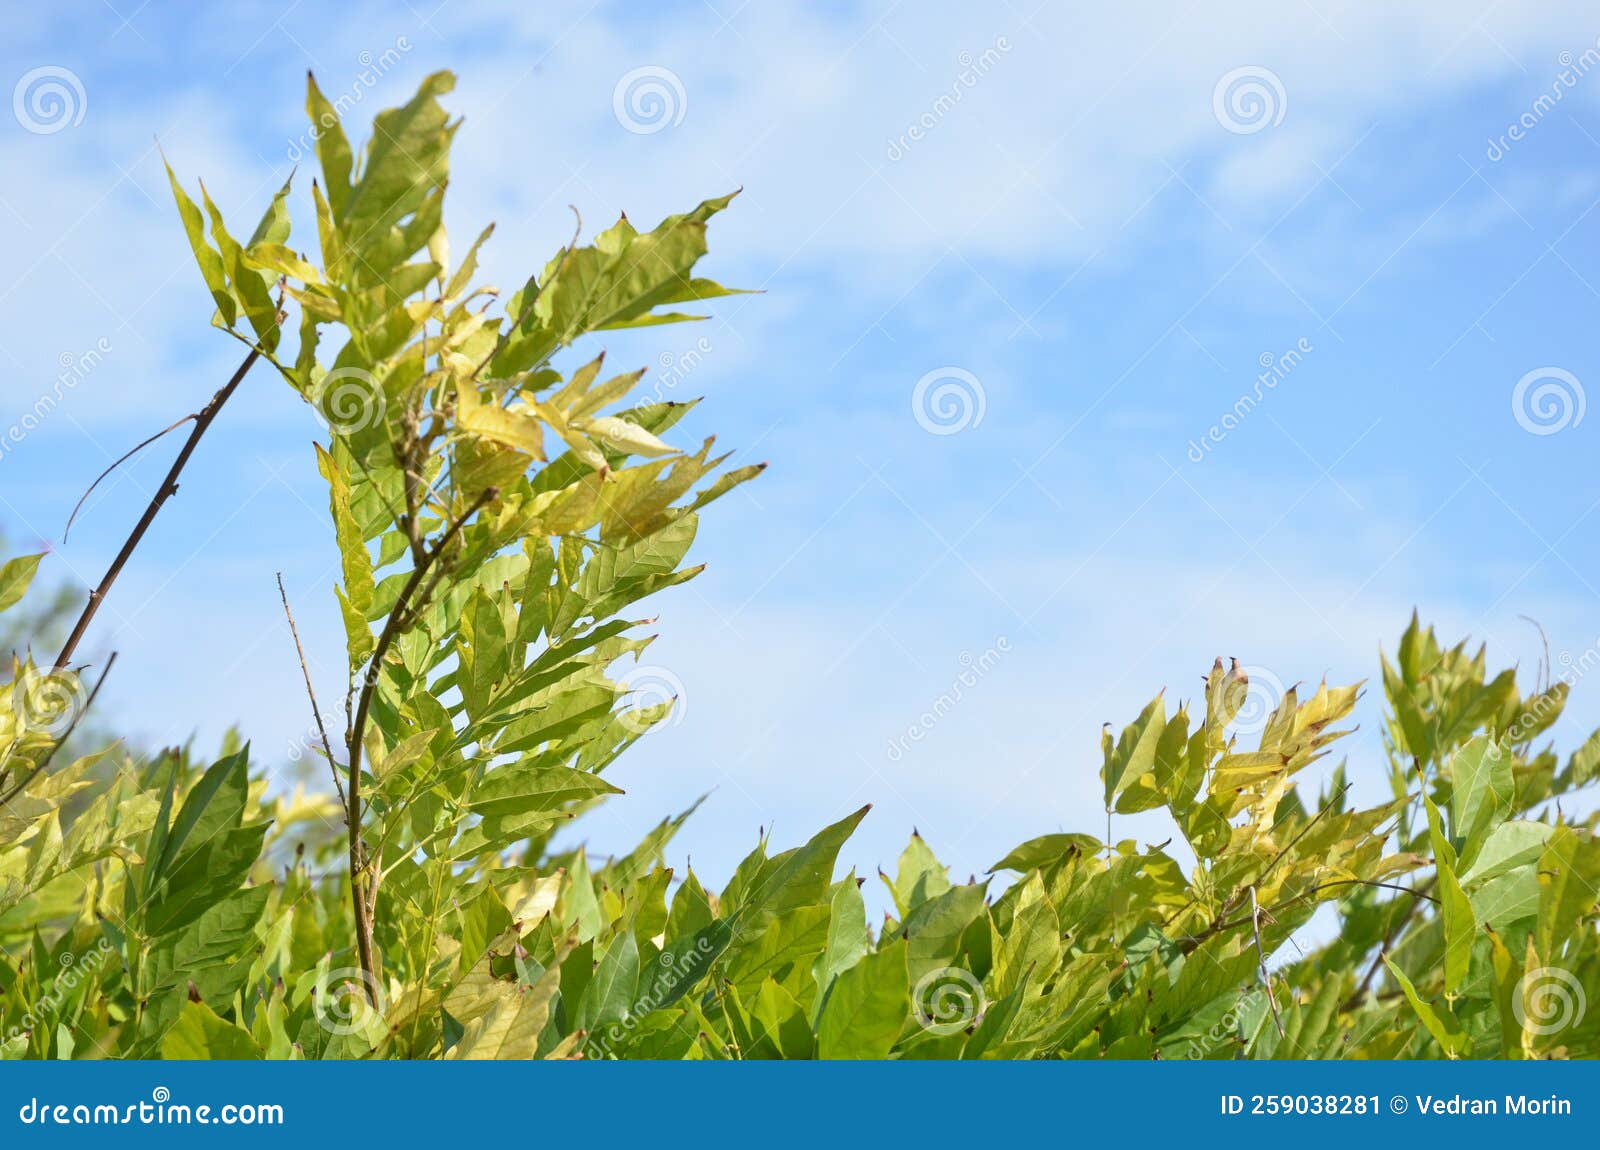 Ailanthus Altissima Or Tree Of Heaven Ailanthus Varnish Tree Stock